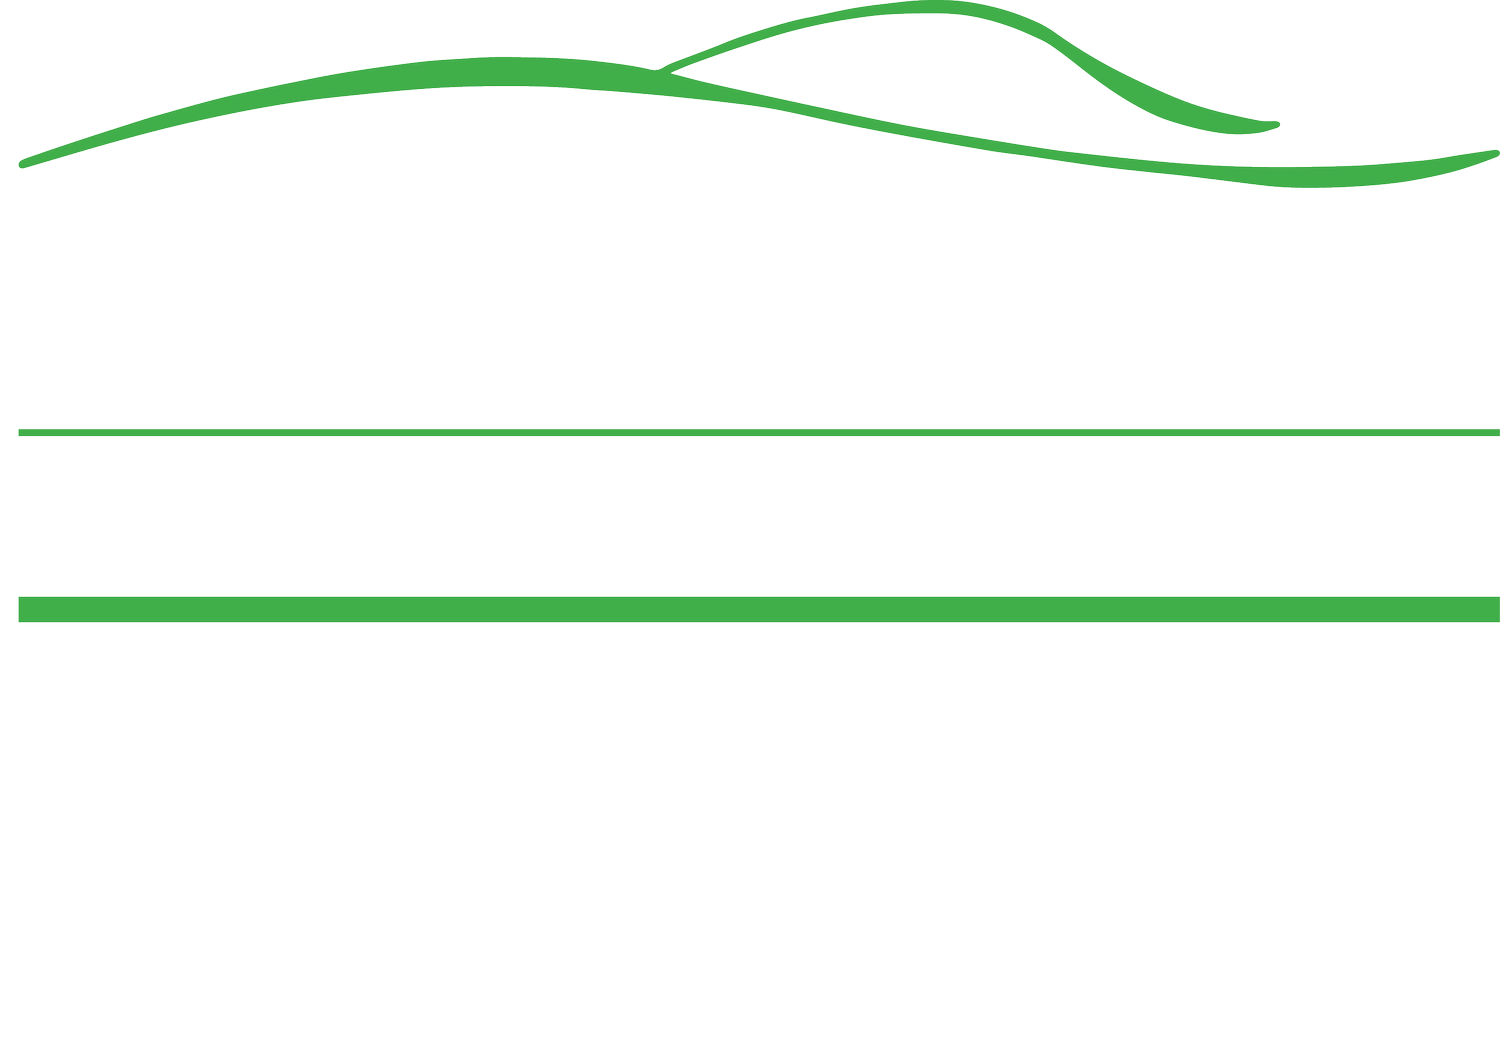 Piedmont Sleep Center